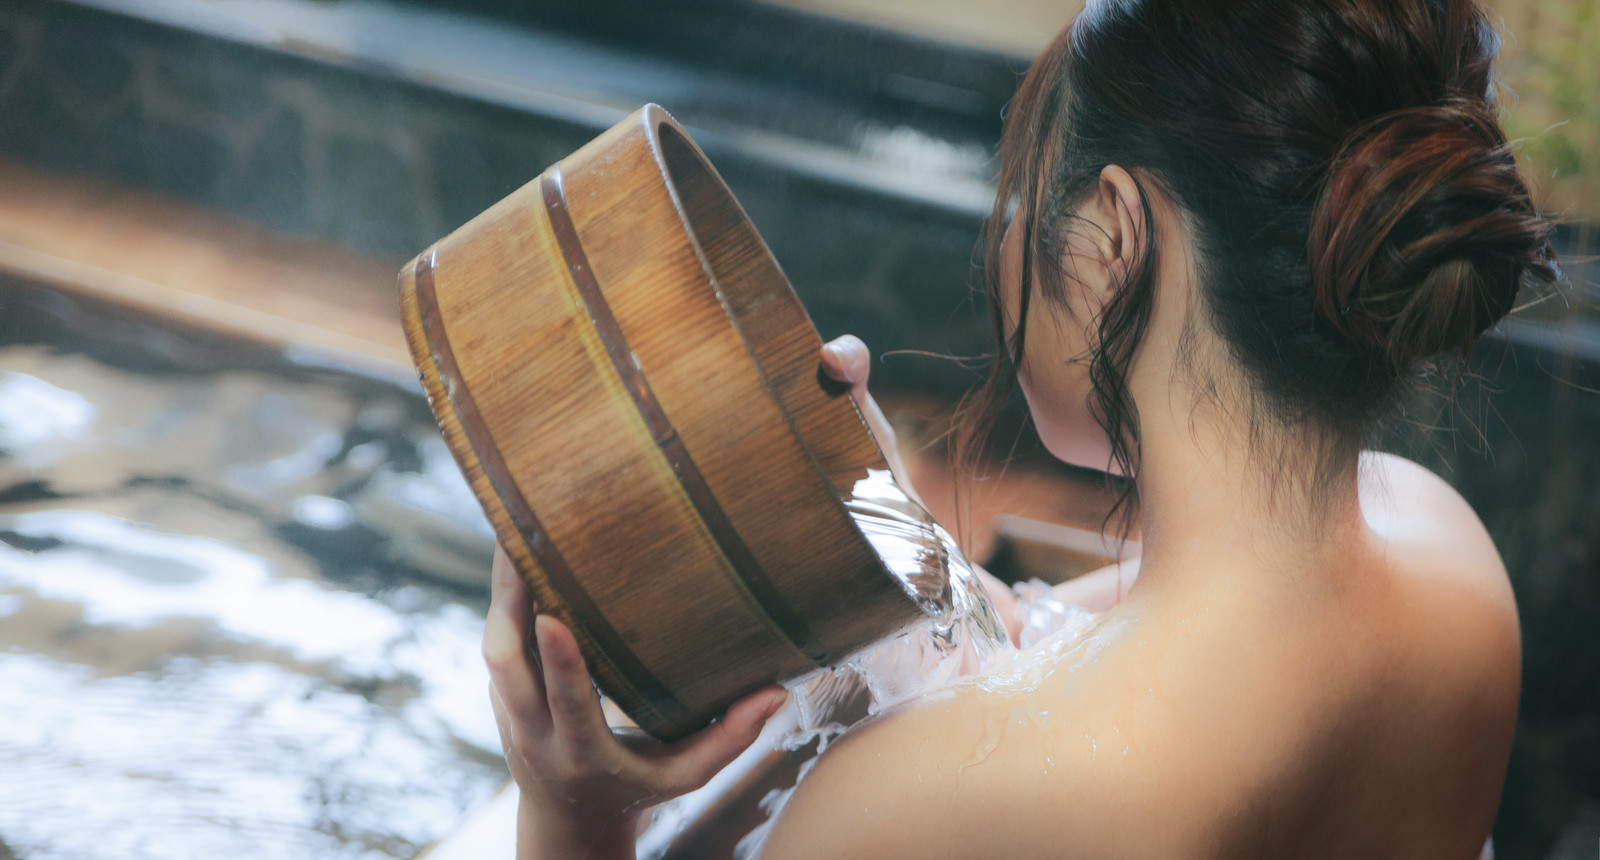 13 Japanese teen boys caught peeping into girls hot spring bath during class trip SoraNews24 -Japan News-